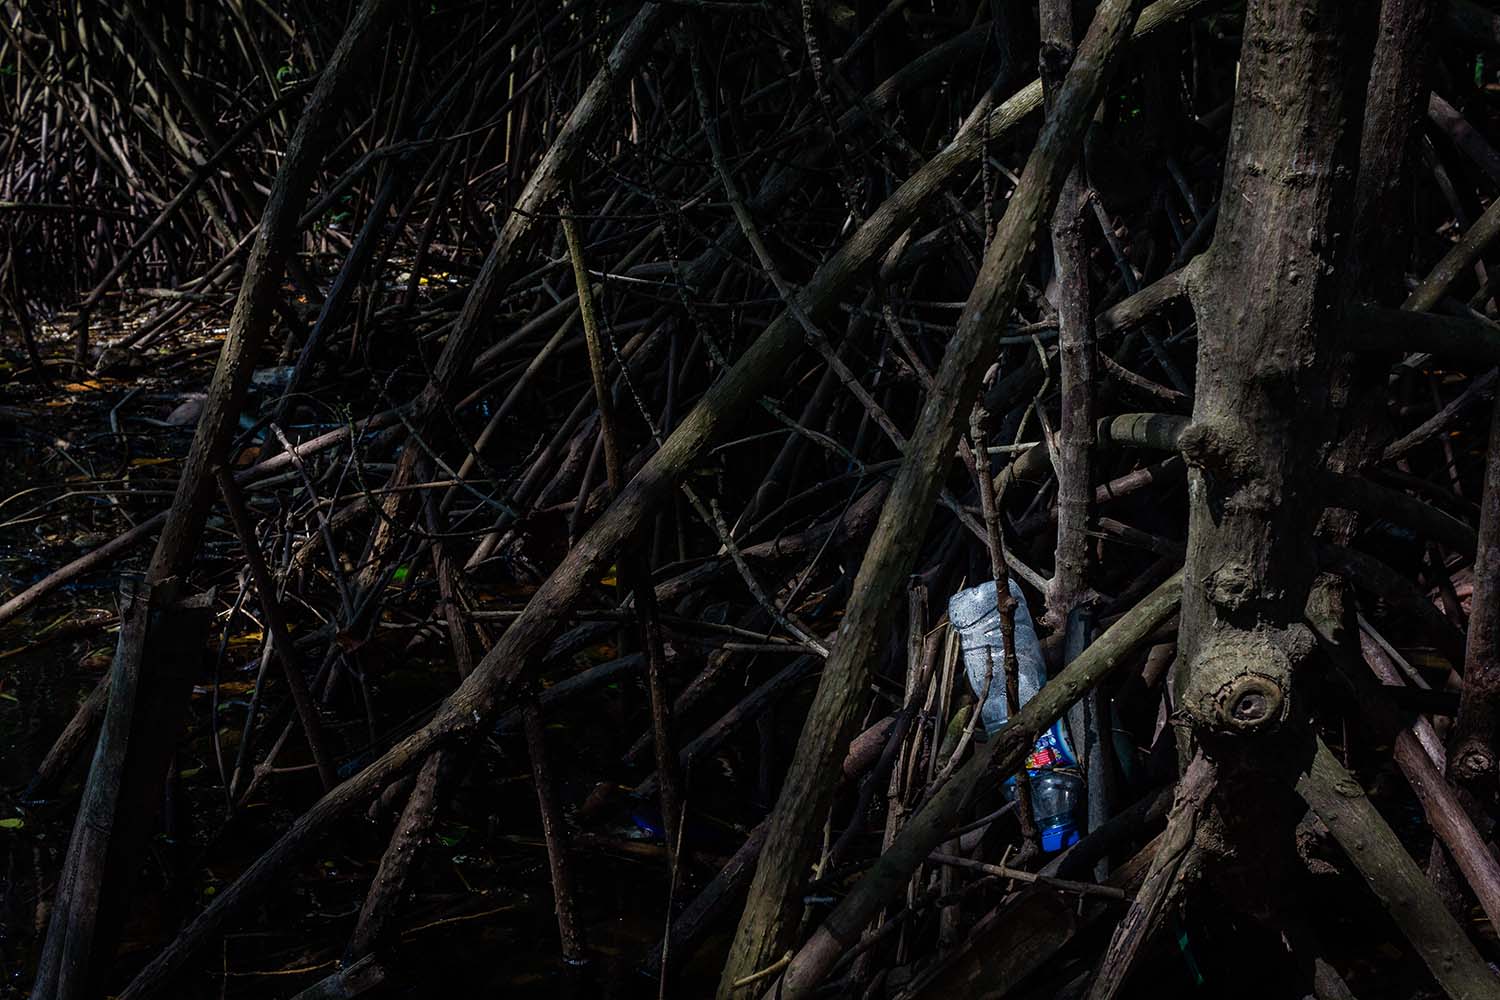 Plastic bottles get trapped between mangrove roots. JP/Anggertimur Lanang Tinarbuko